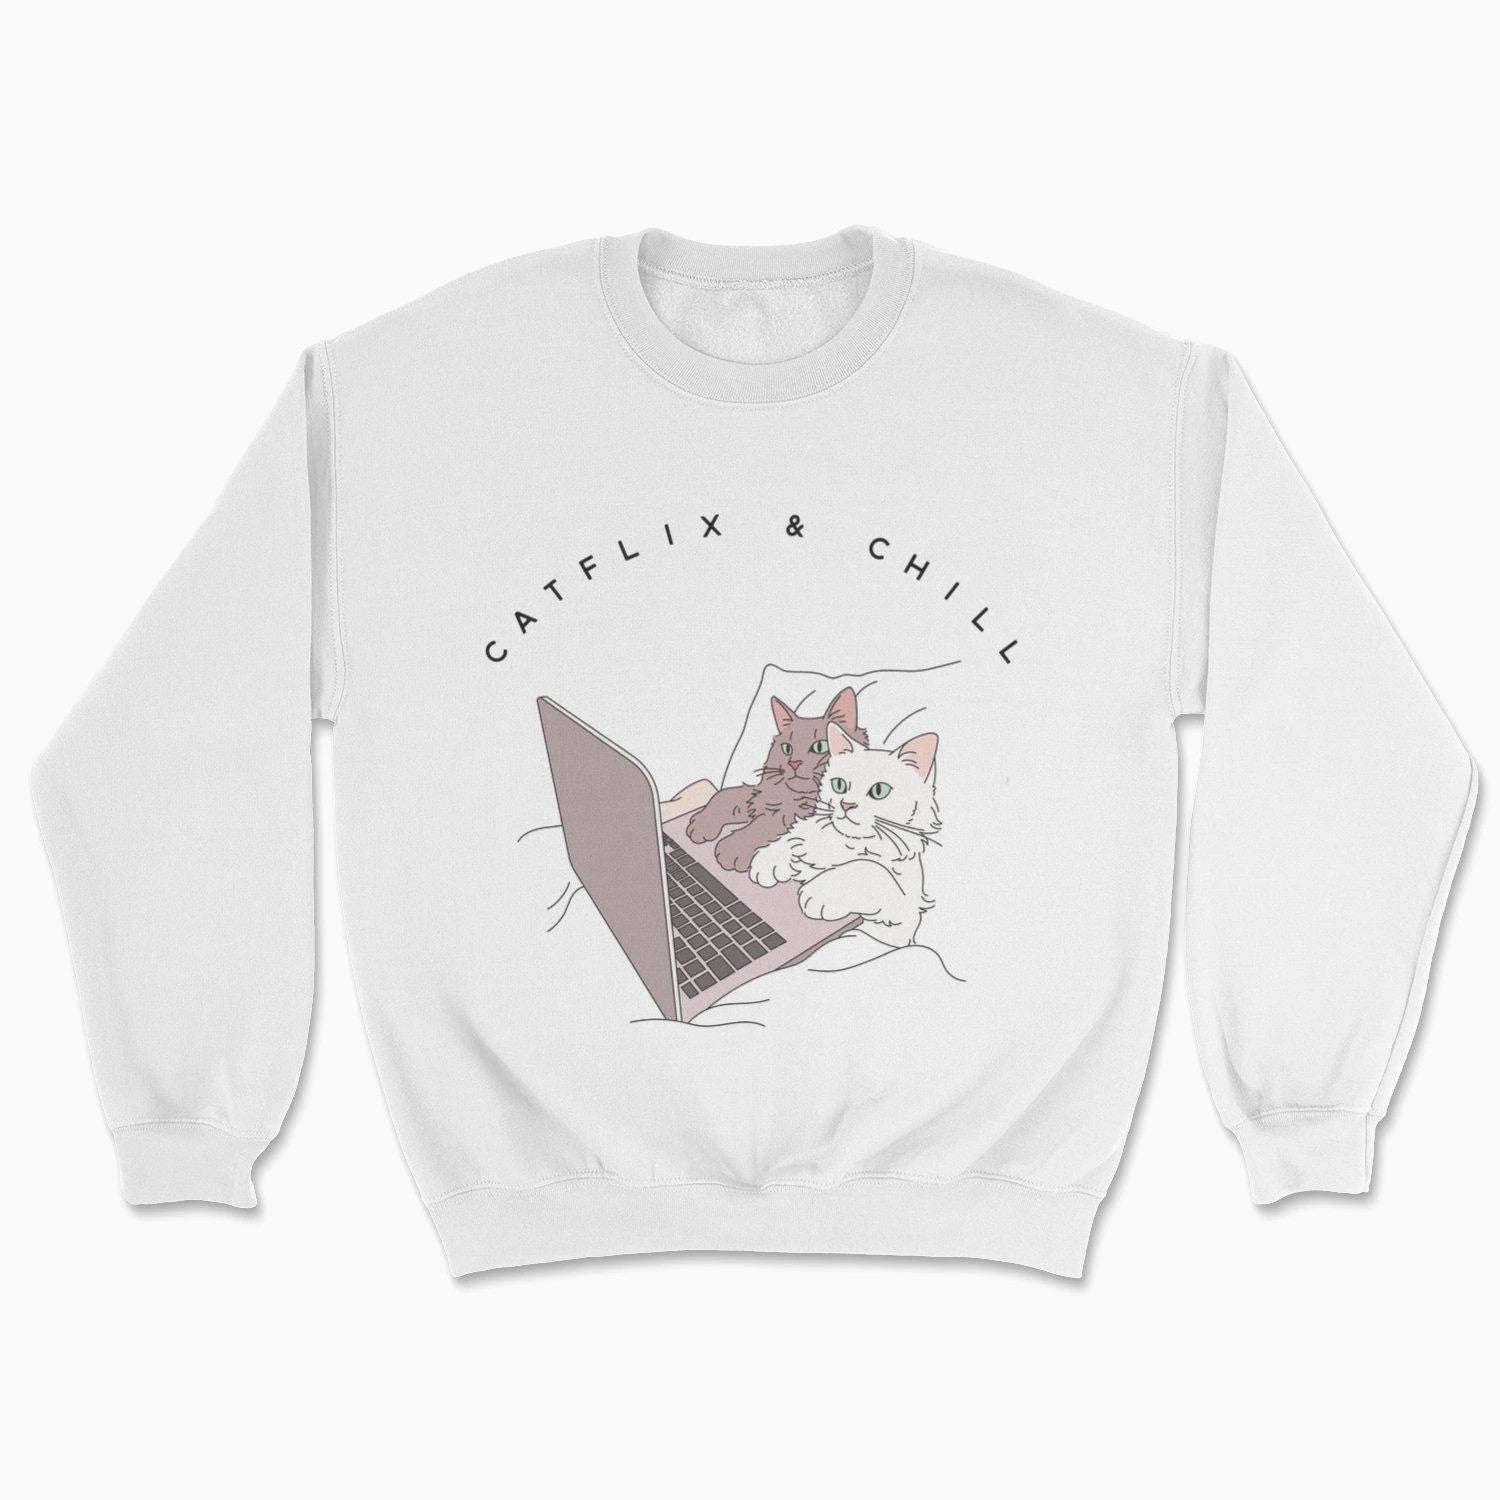 Catflix & Chill Sweatshirt - Pawsome Couture